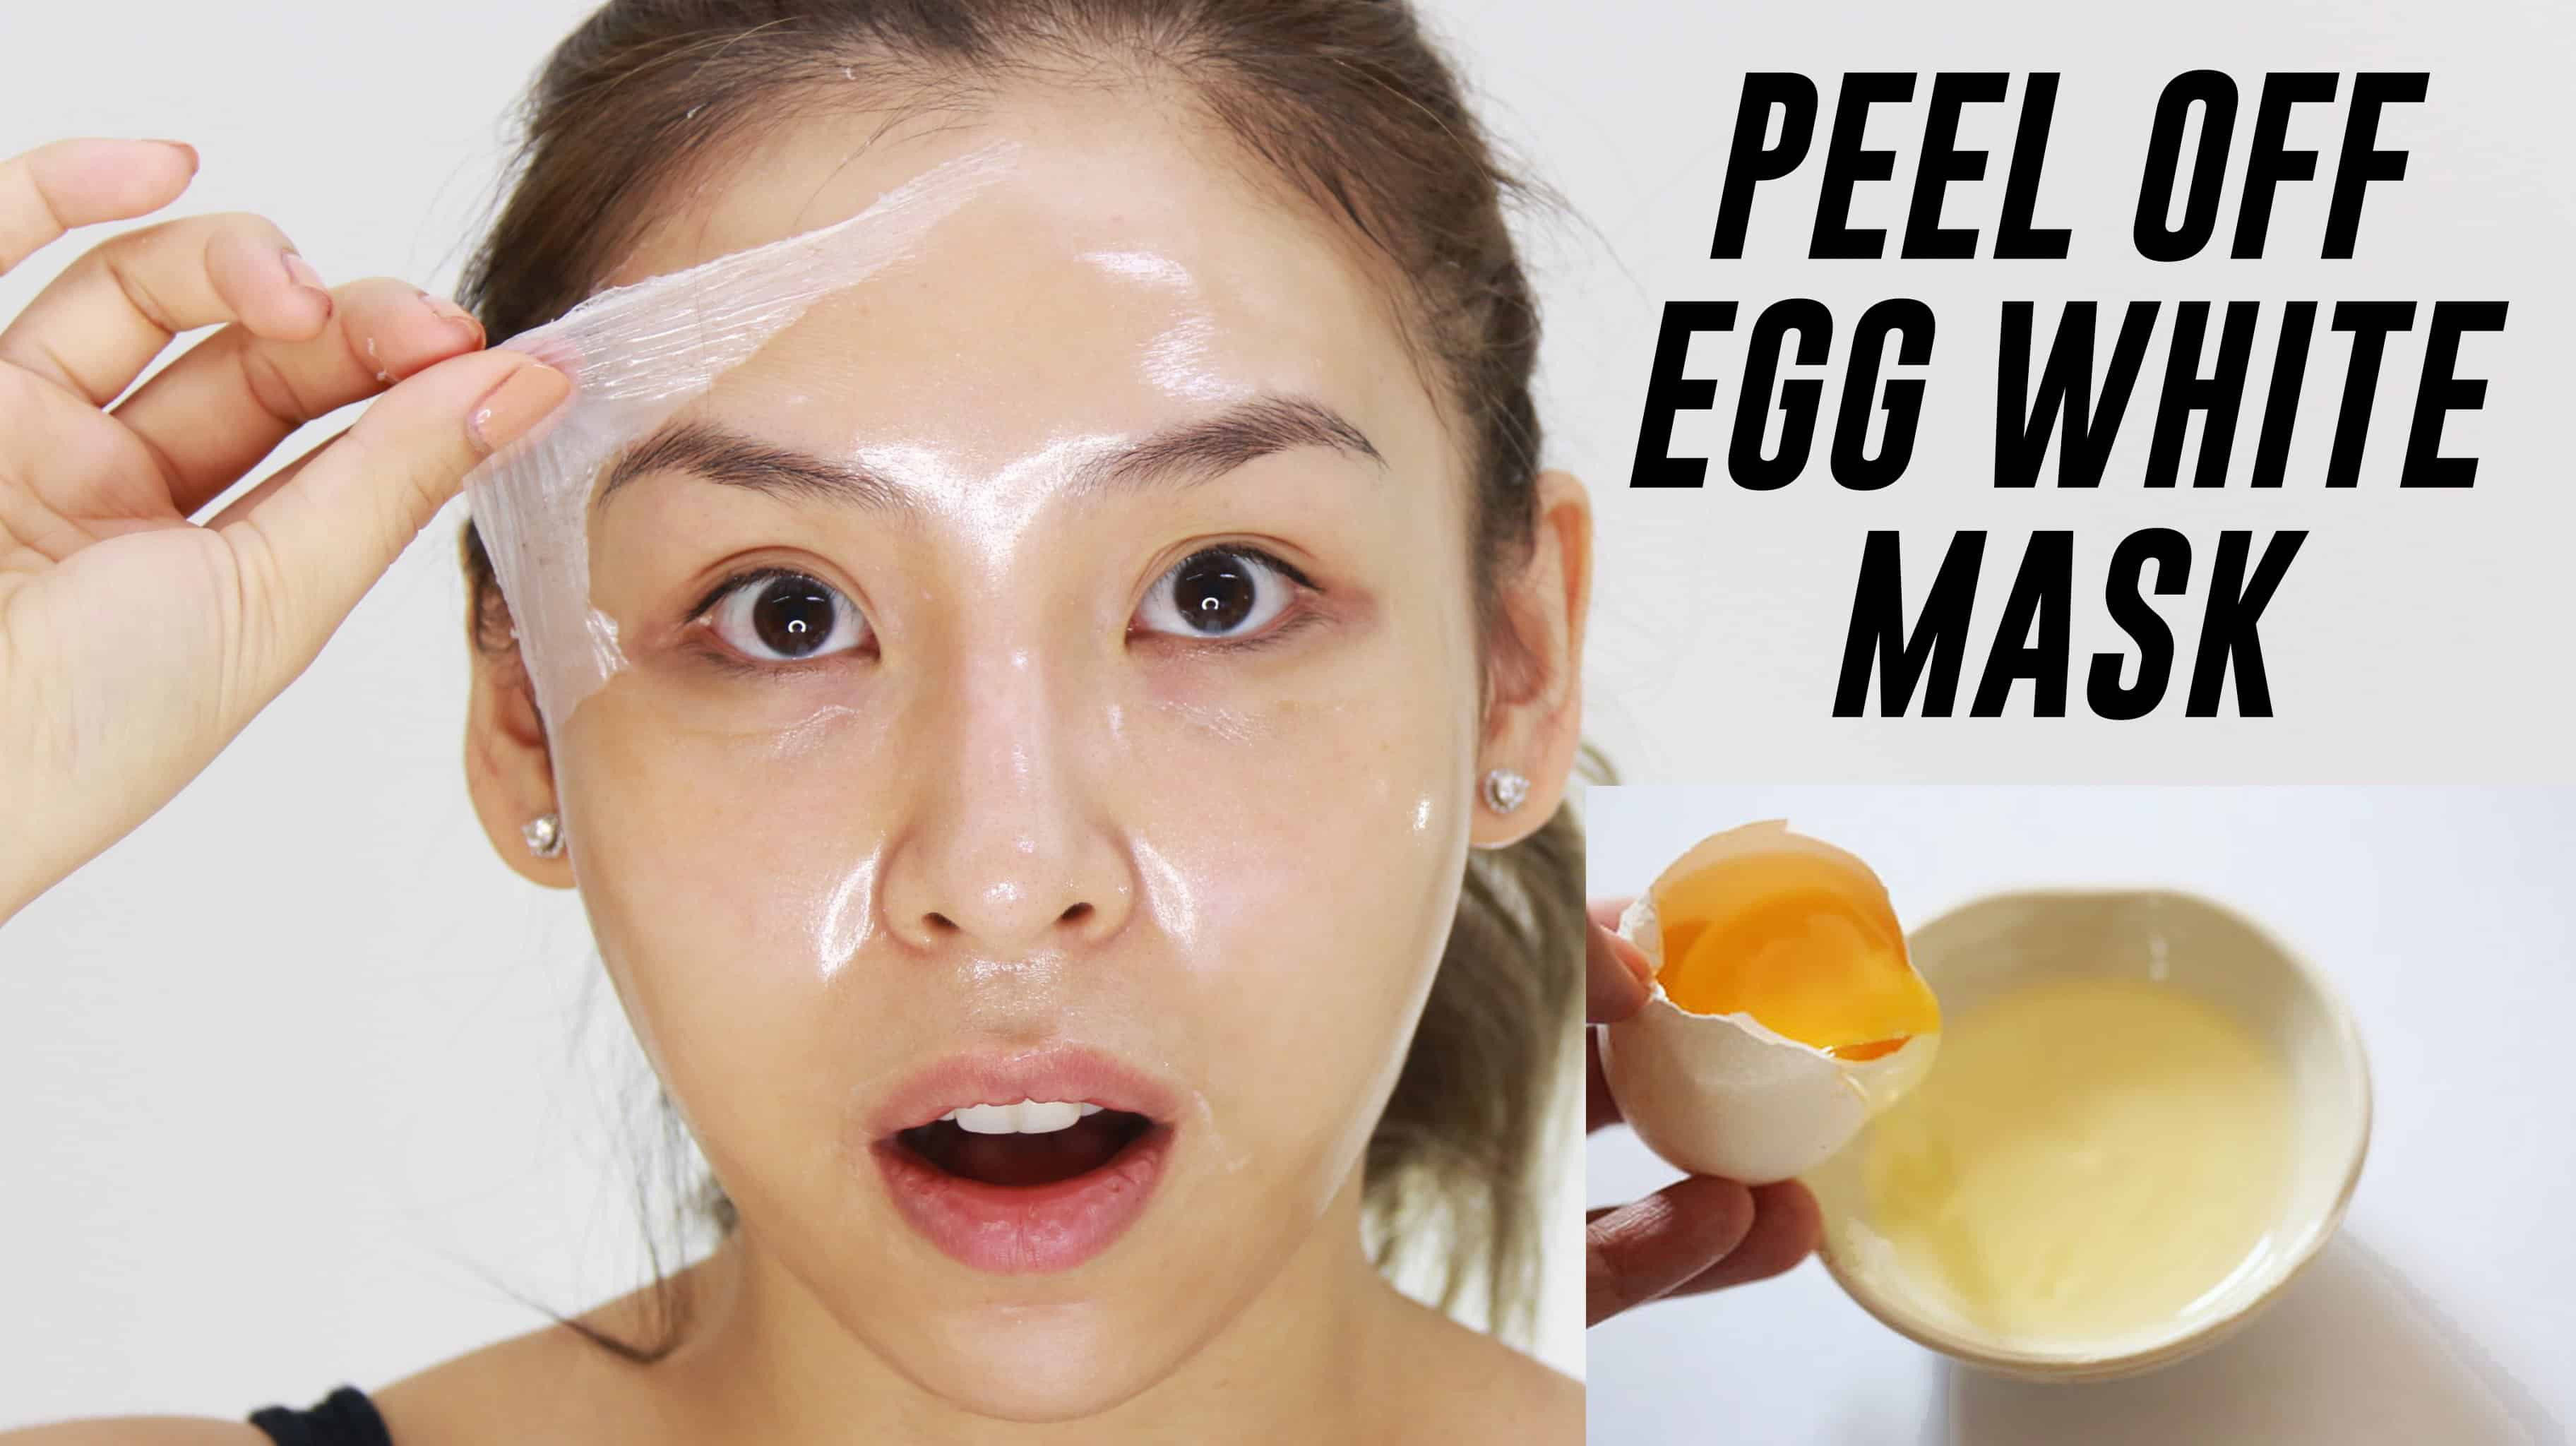 Best ideas about DIY Egg White Peel Off Mask
. Save or Pin Efek Samping Memakai Masker Putih Telur Setiap Hari Now.